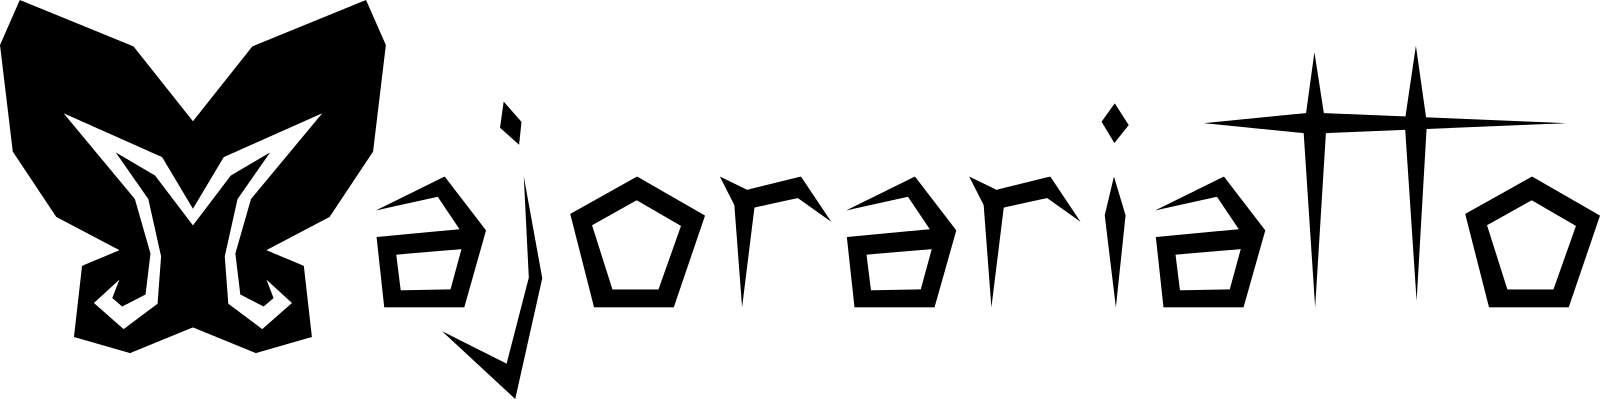 Majorariatto logo